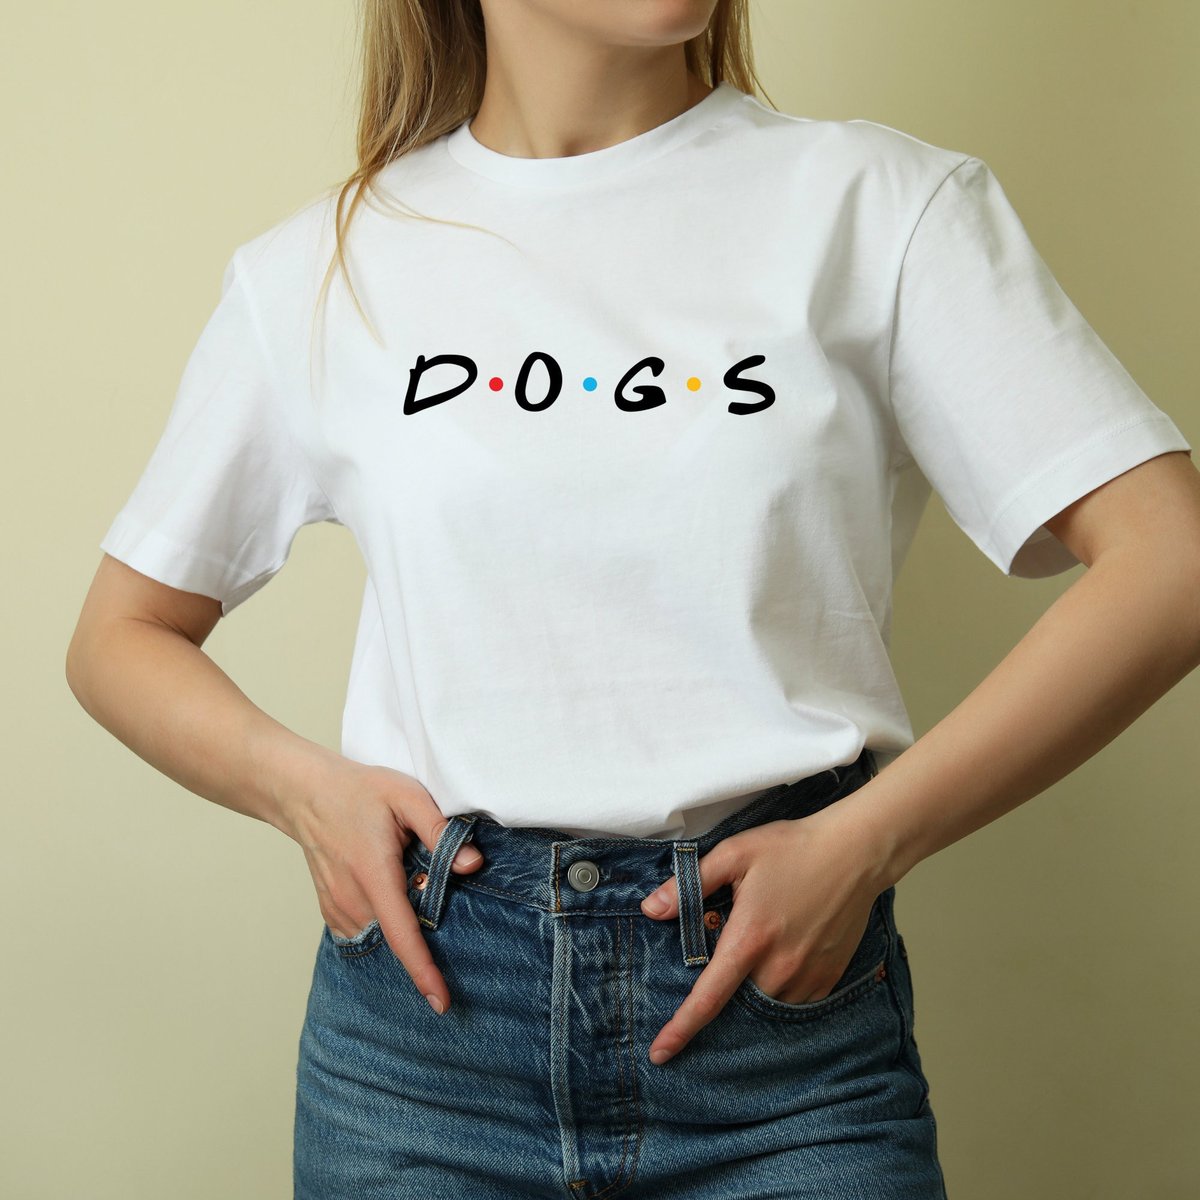 D.O.G.S name minimalist shirt Unisex Heavy Cotton Tee @all @everyone #etsy etsy.me/40Tms0h #minimalist #dogsshirtname #minimalistdogshirt #doglovershirt #minimalistshirt #dogsdesignshirt #cottonshirt #animalloversshirt #trendyshirts